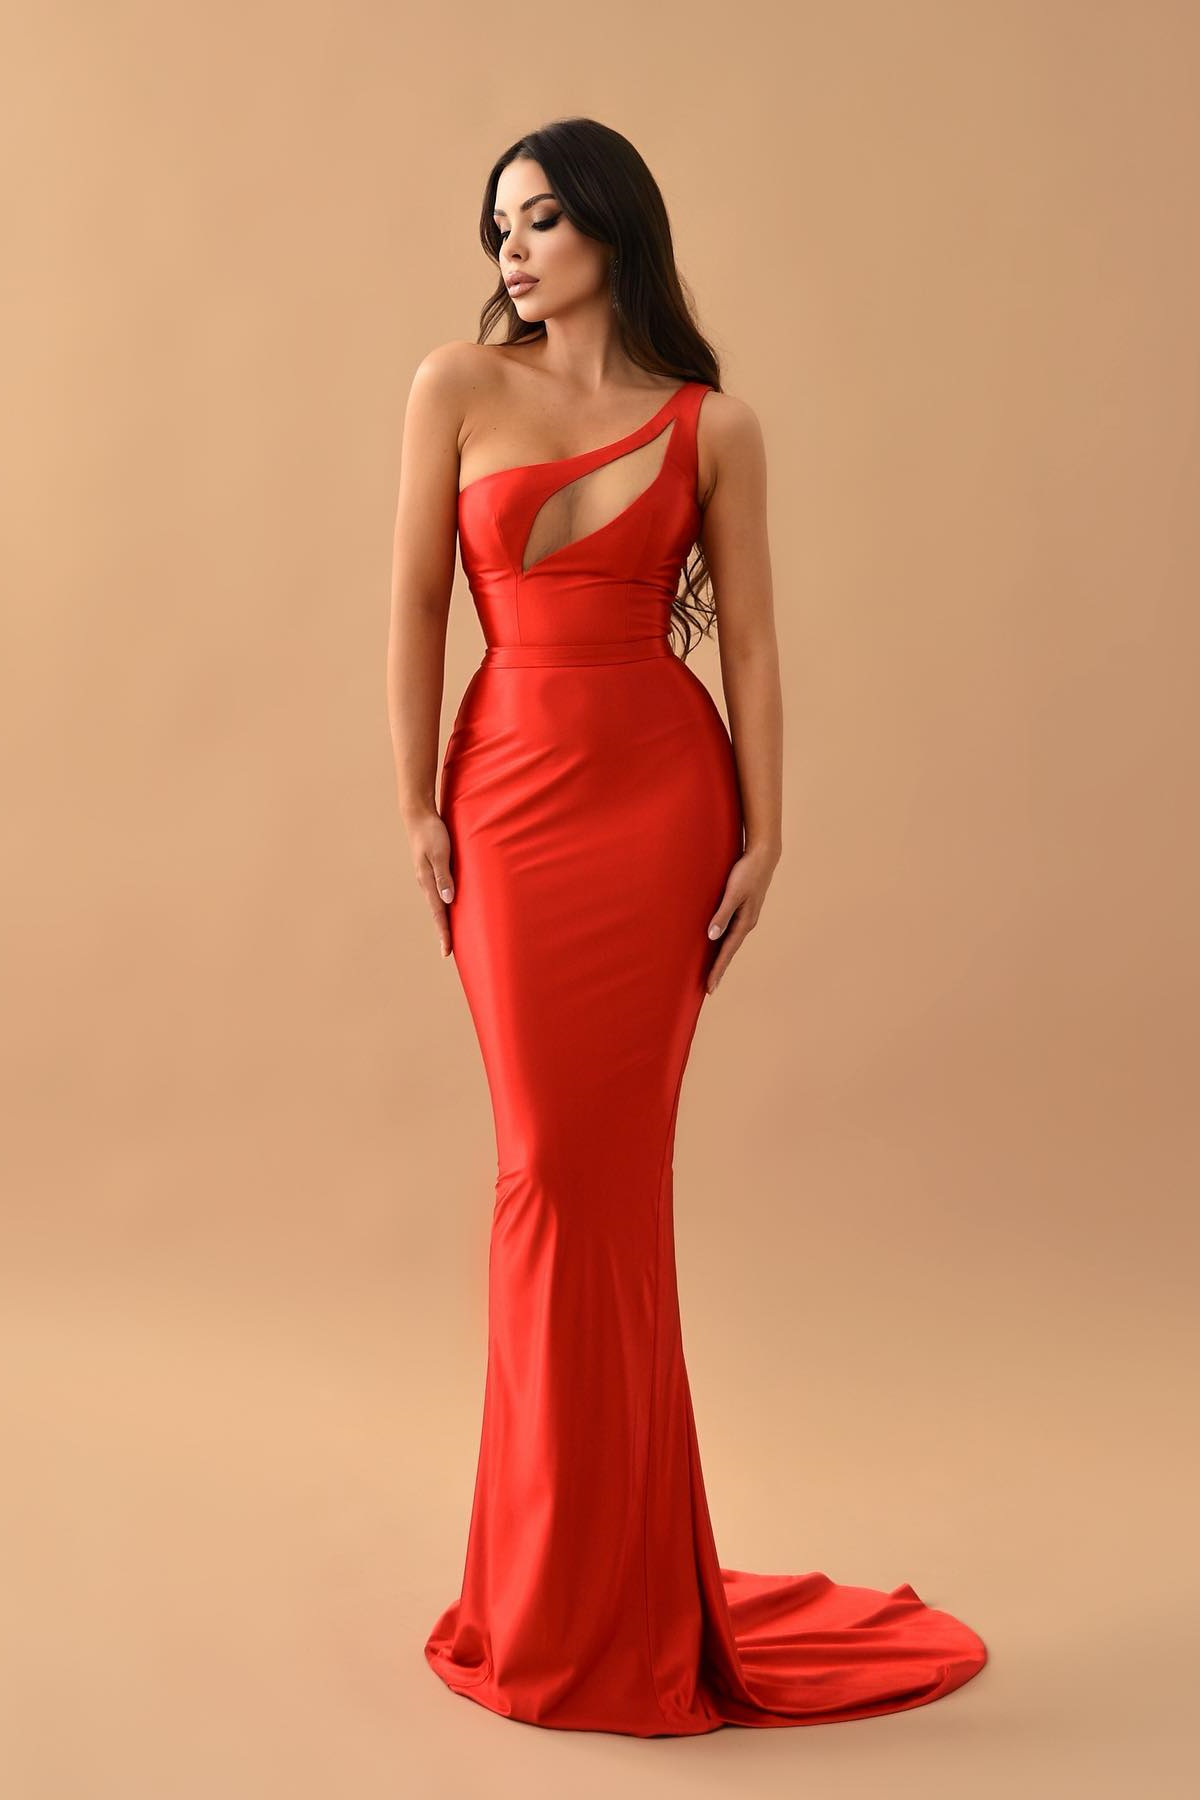 Bellasprom Red One Shoulder Sleeveless Mermaid Prom Dress On Sale Long Bellasprom